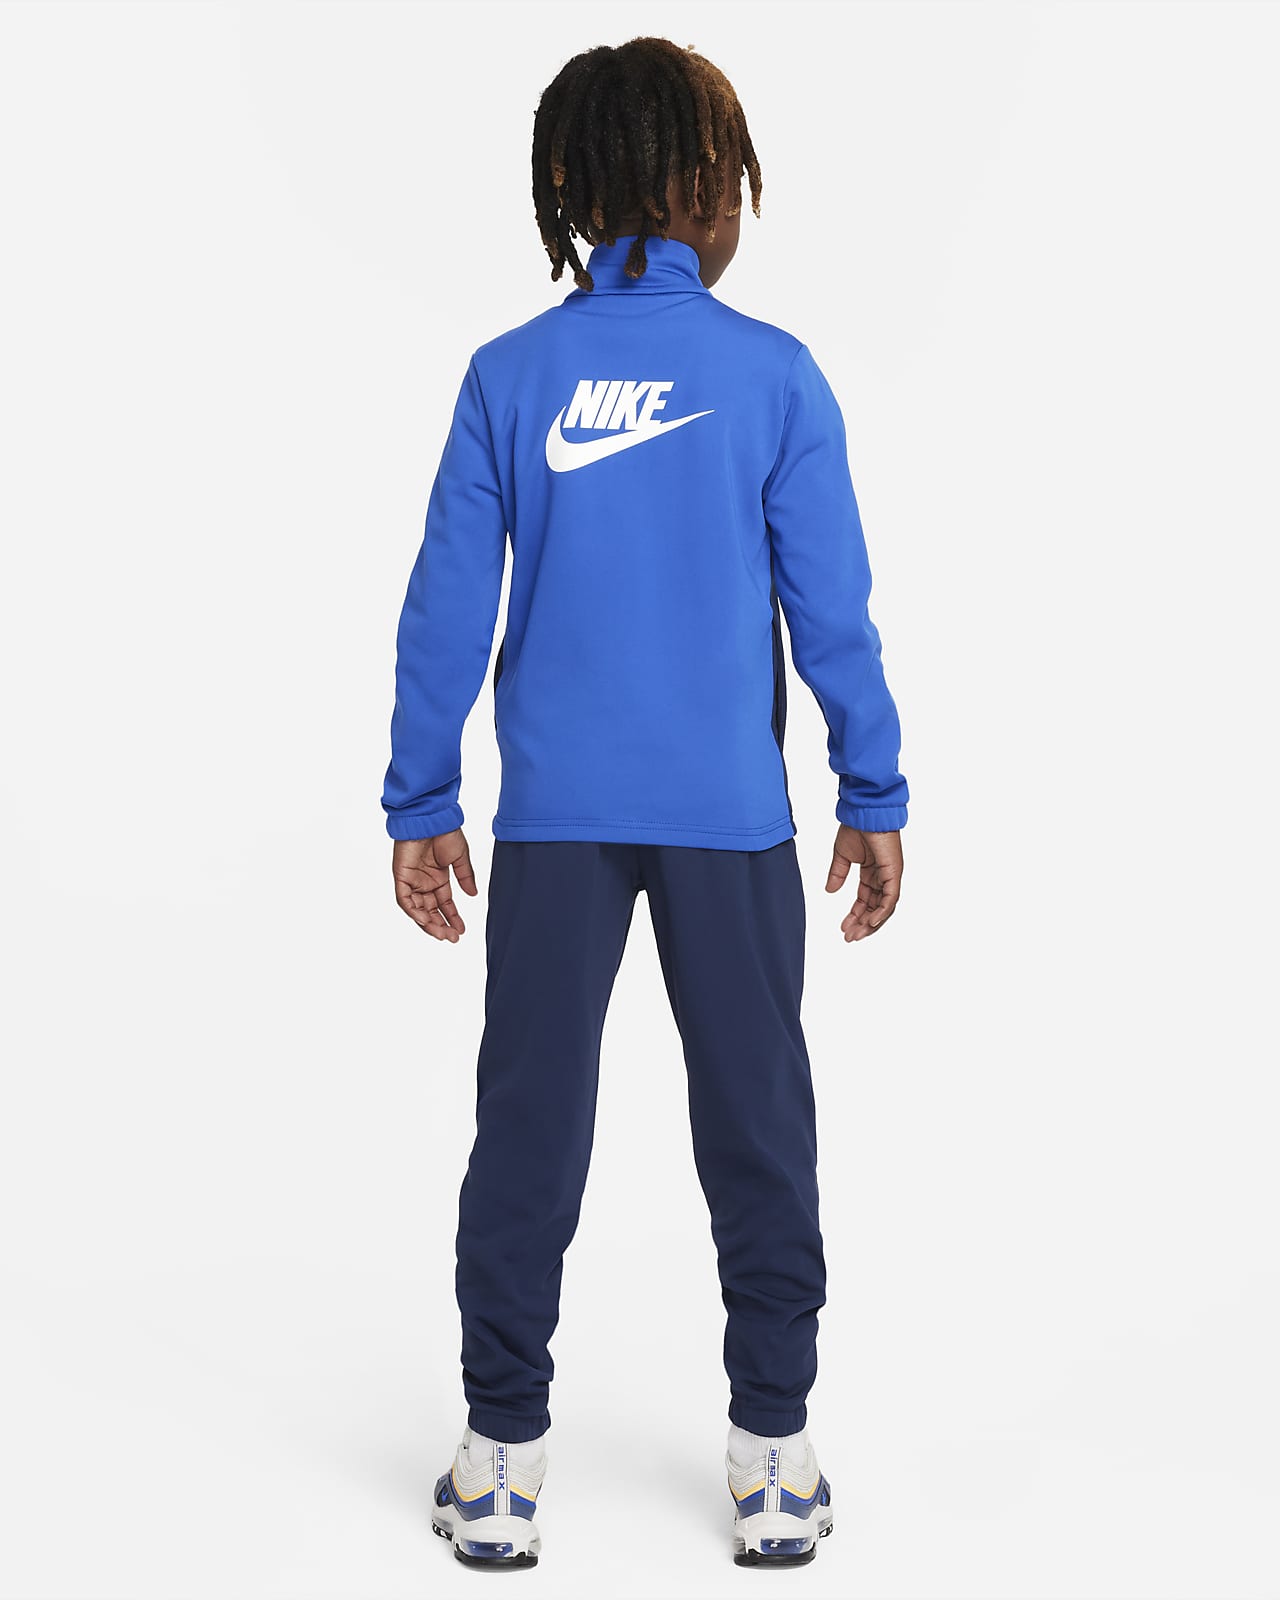 Diktat Stolpe Sprout Nike Sportswear-tracksuit til større børn. Nike DK